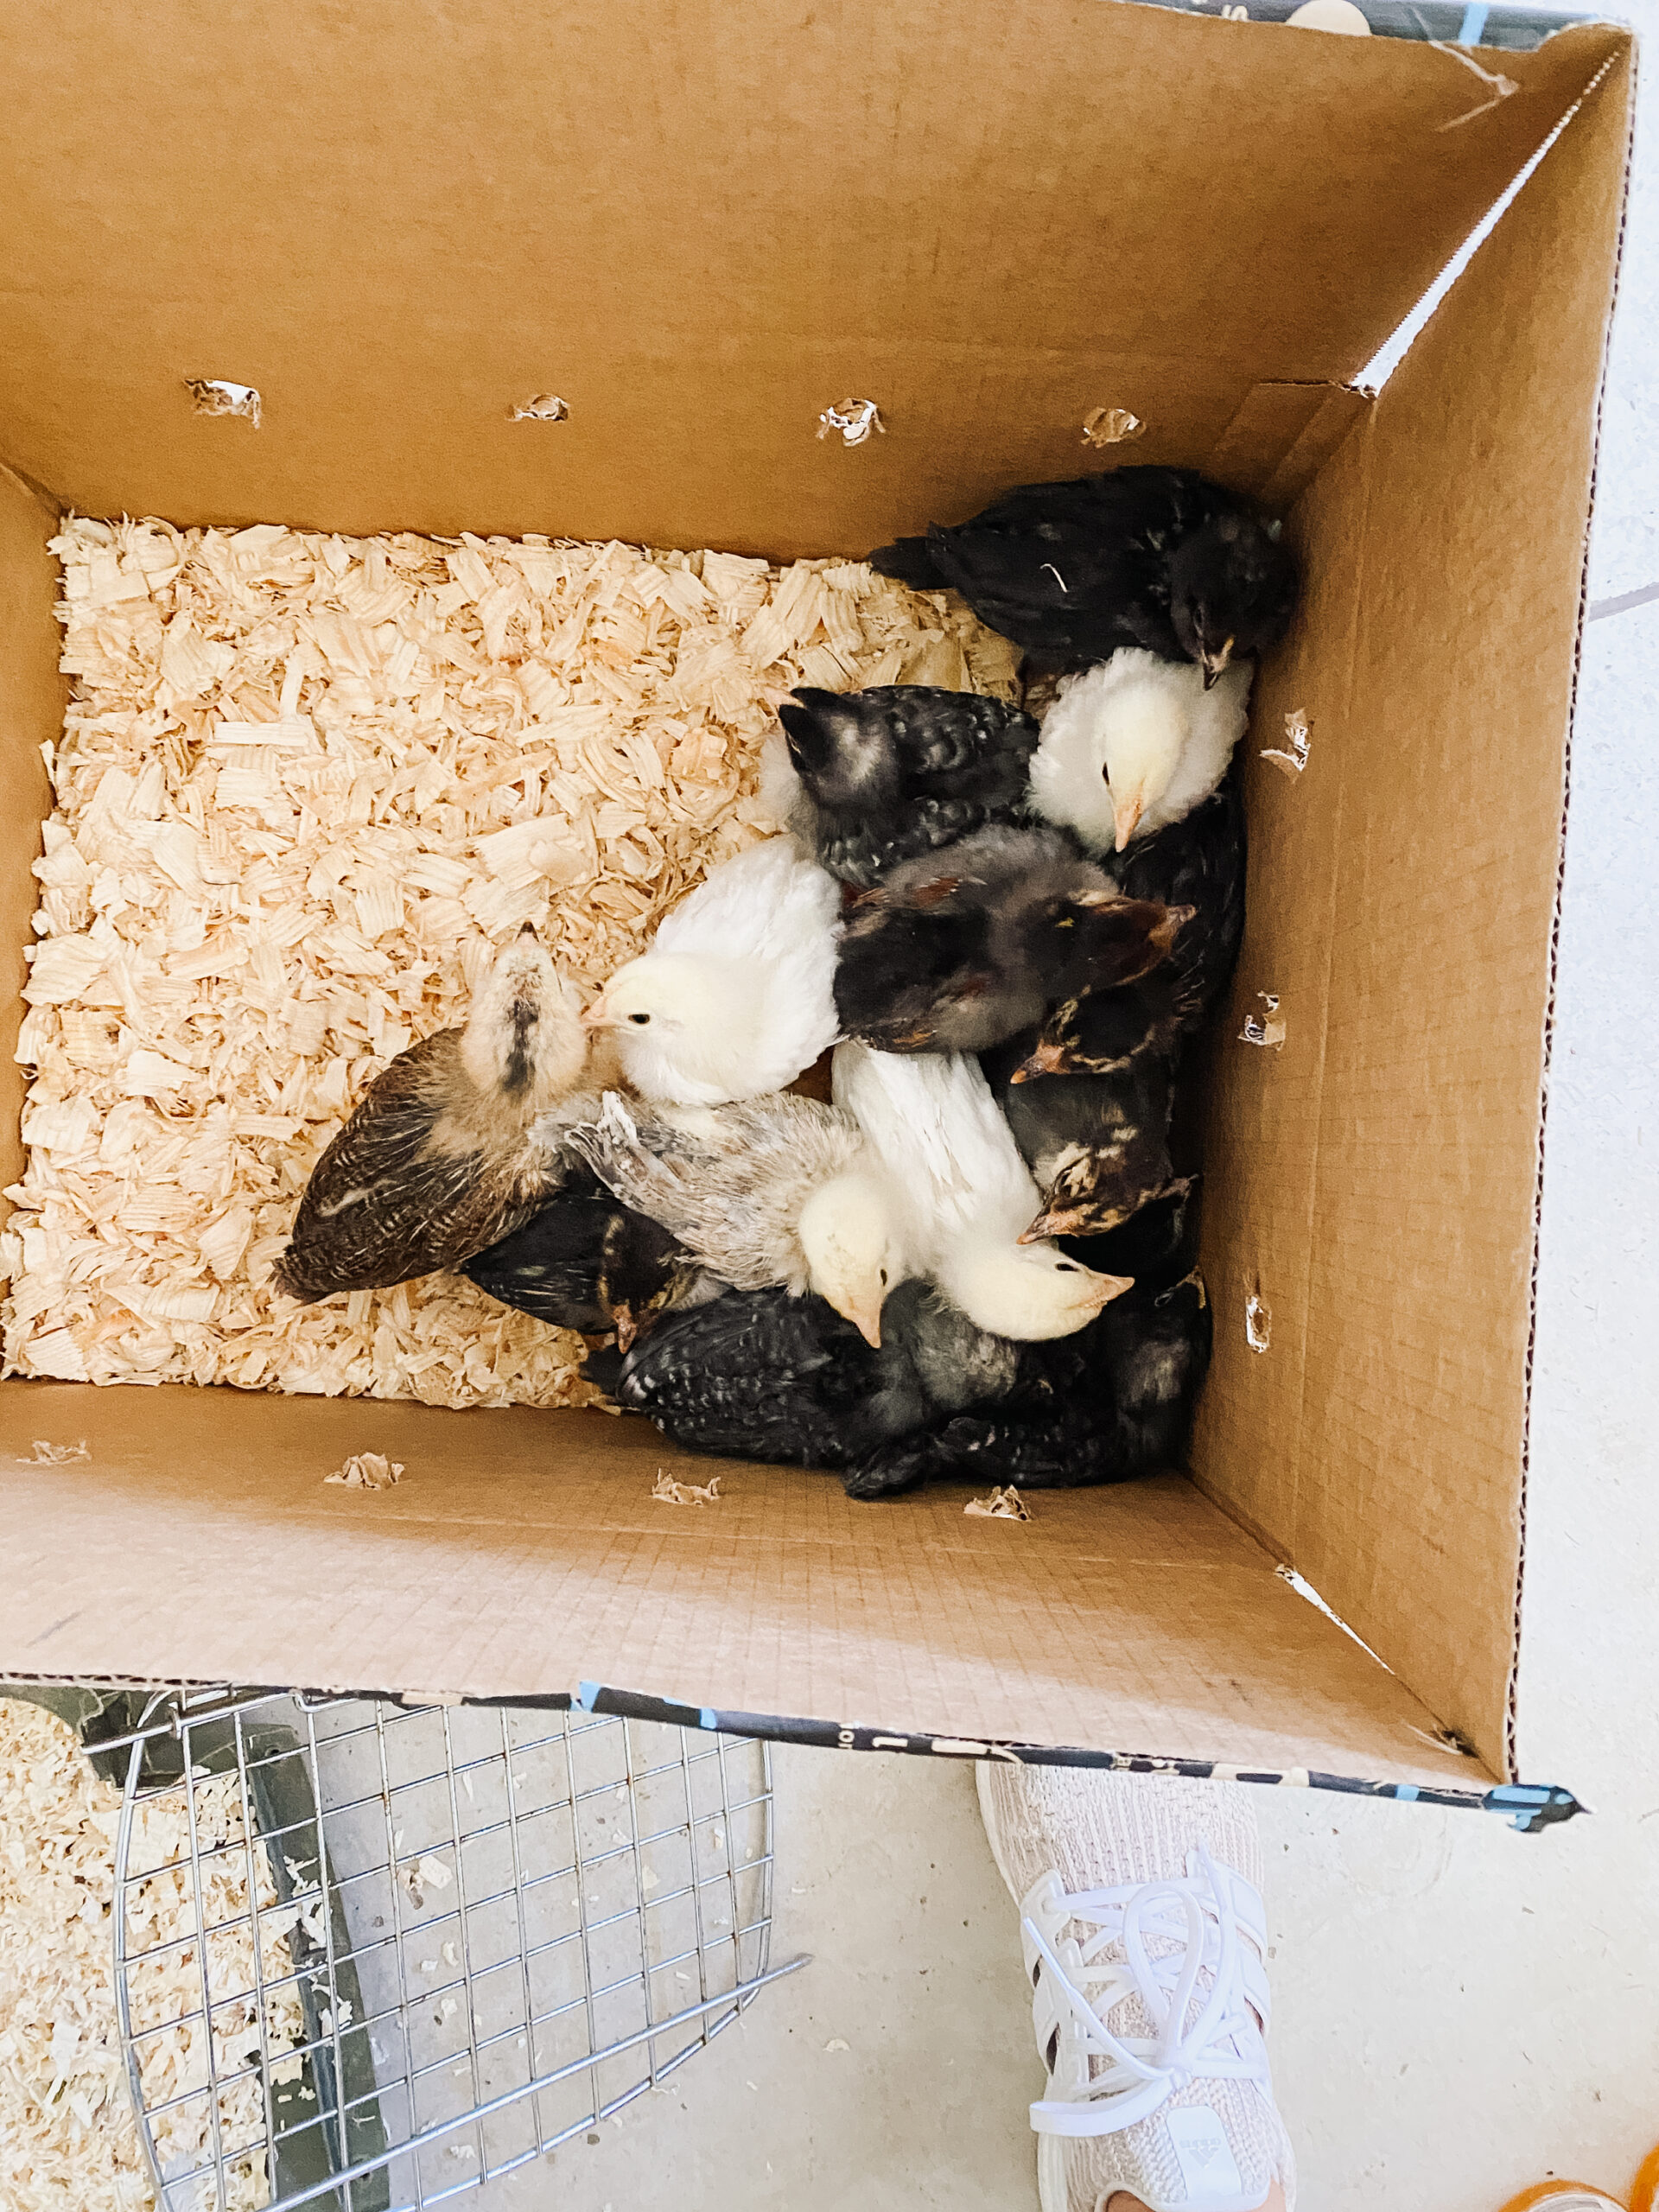 three week old baby chicks, ready fto head to their new home. #thelovedesignedlife #babychicks #backyardchickens